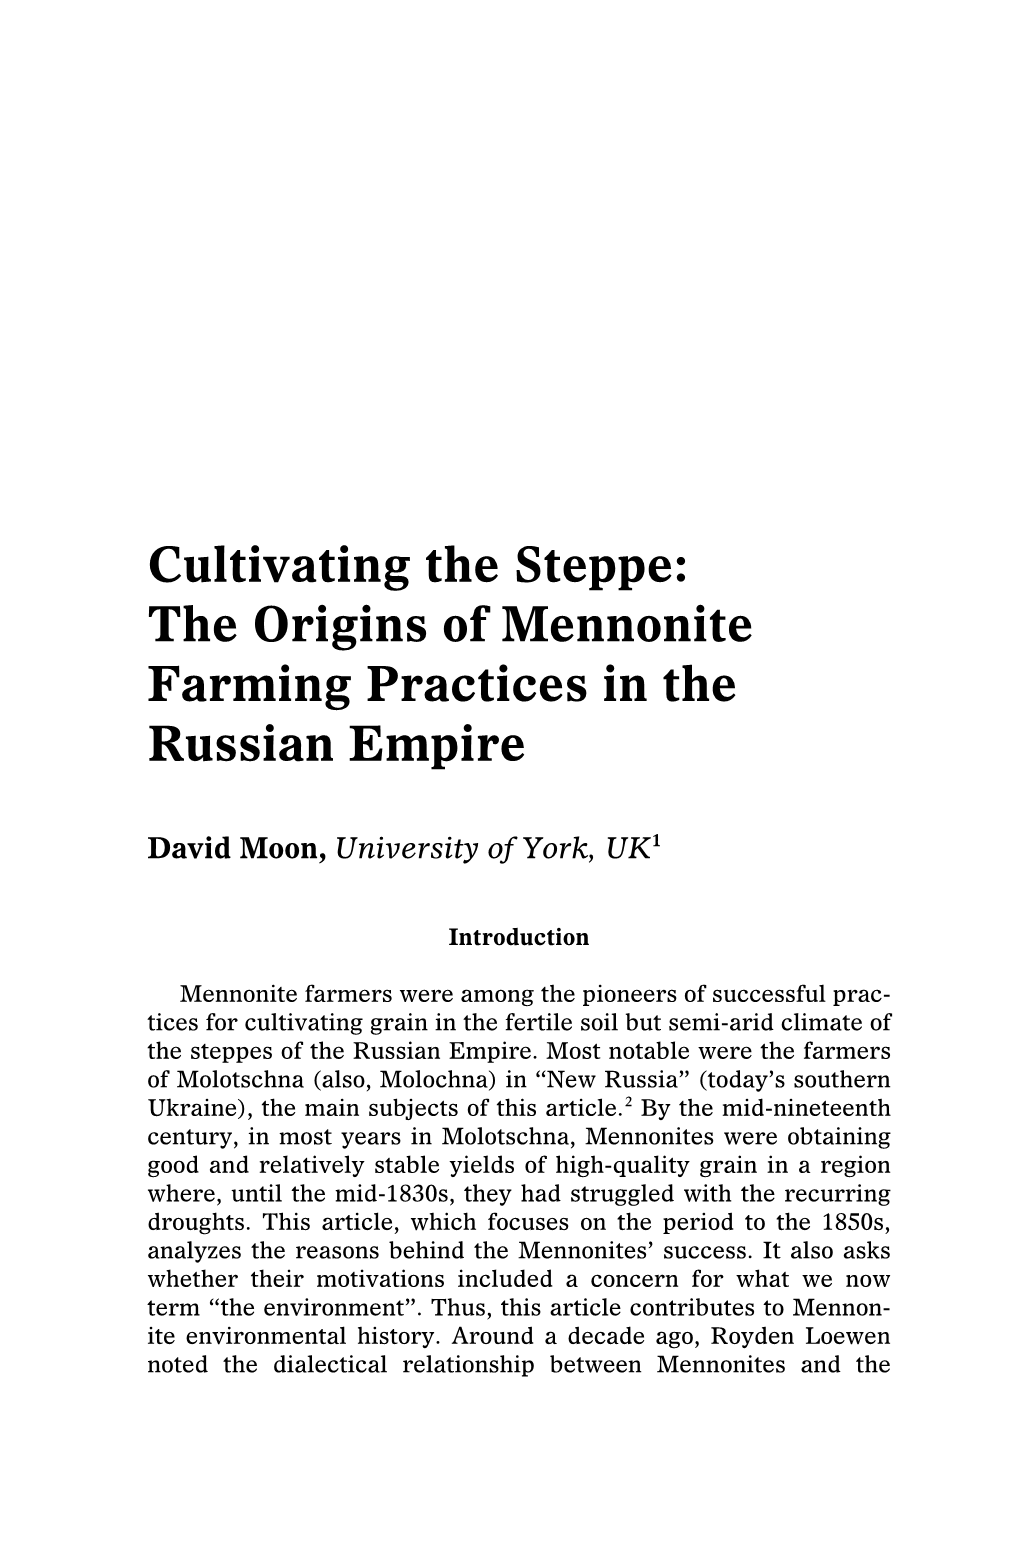 The Origins of Mennonite Farming Practices in the Russian Empire